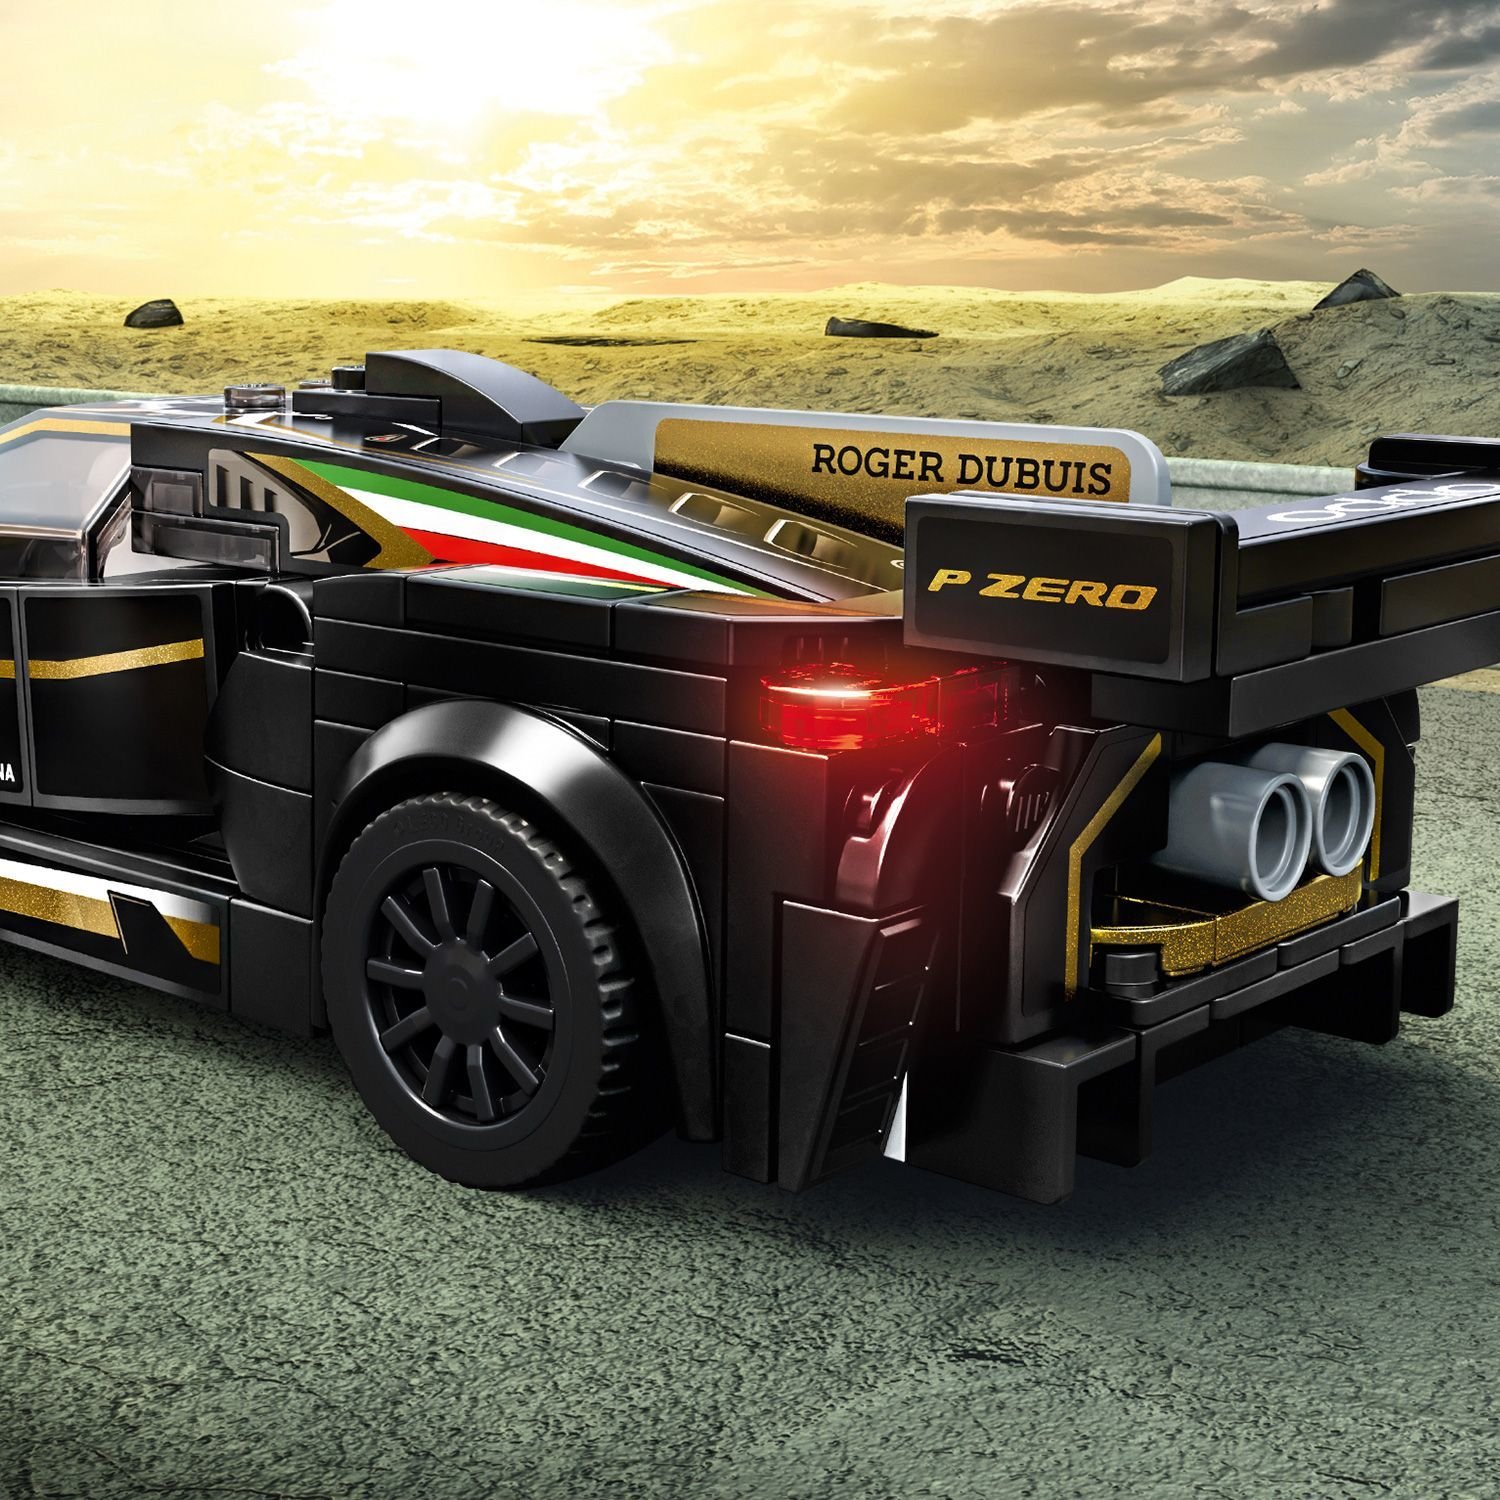 Lego Speed Champions 76899 Lamborghini Urus ST-X Lamborghini Huracan Super Trofeo EVO